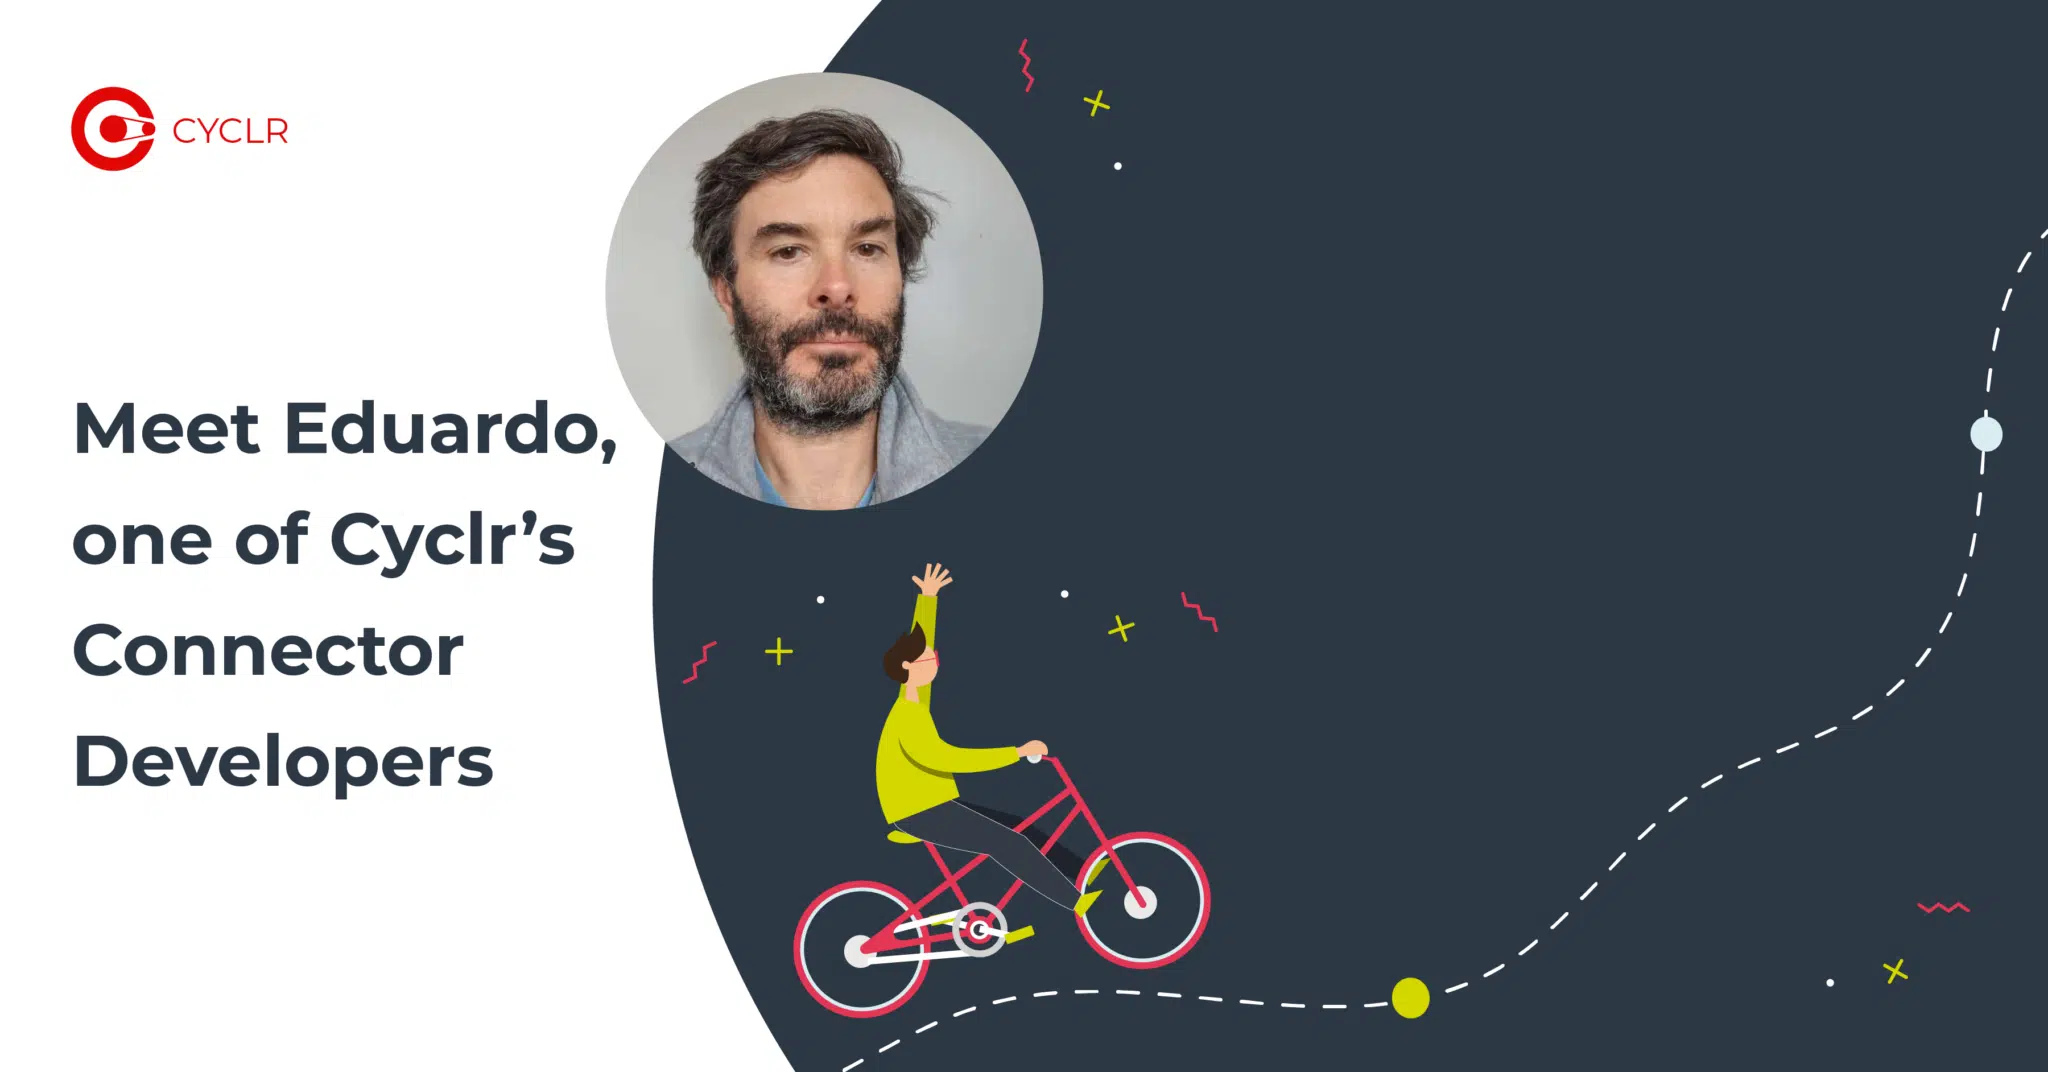 Meet Eduardo, one of Cyclr's Connector Developers